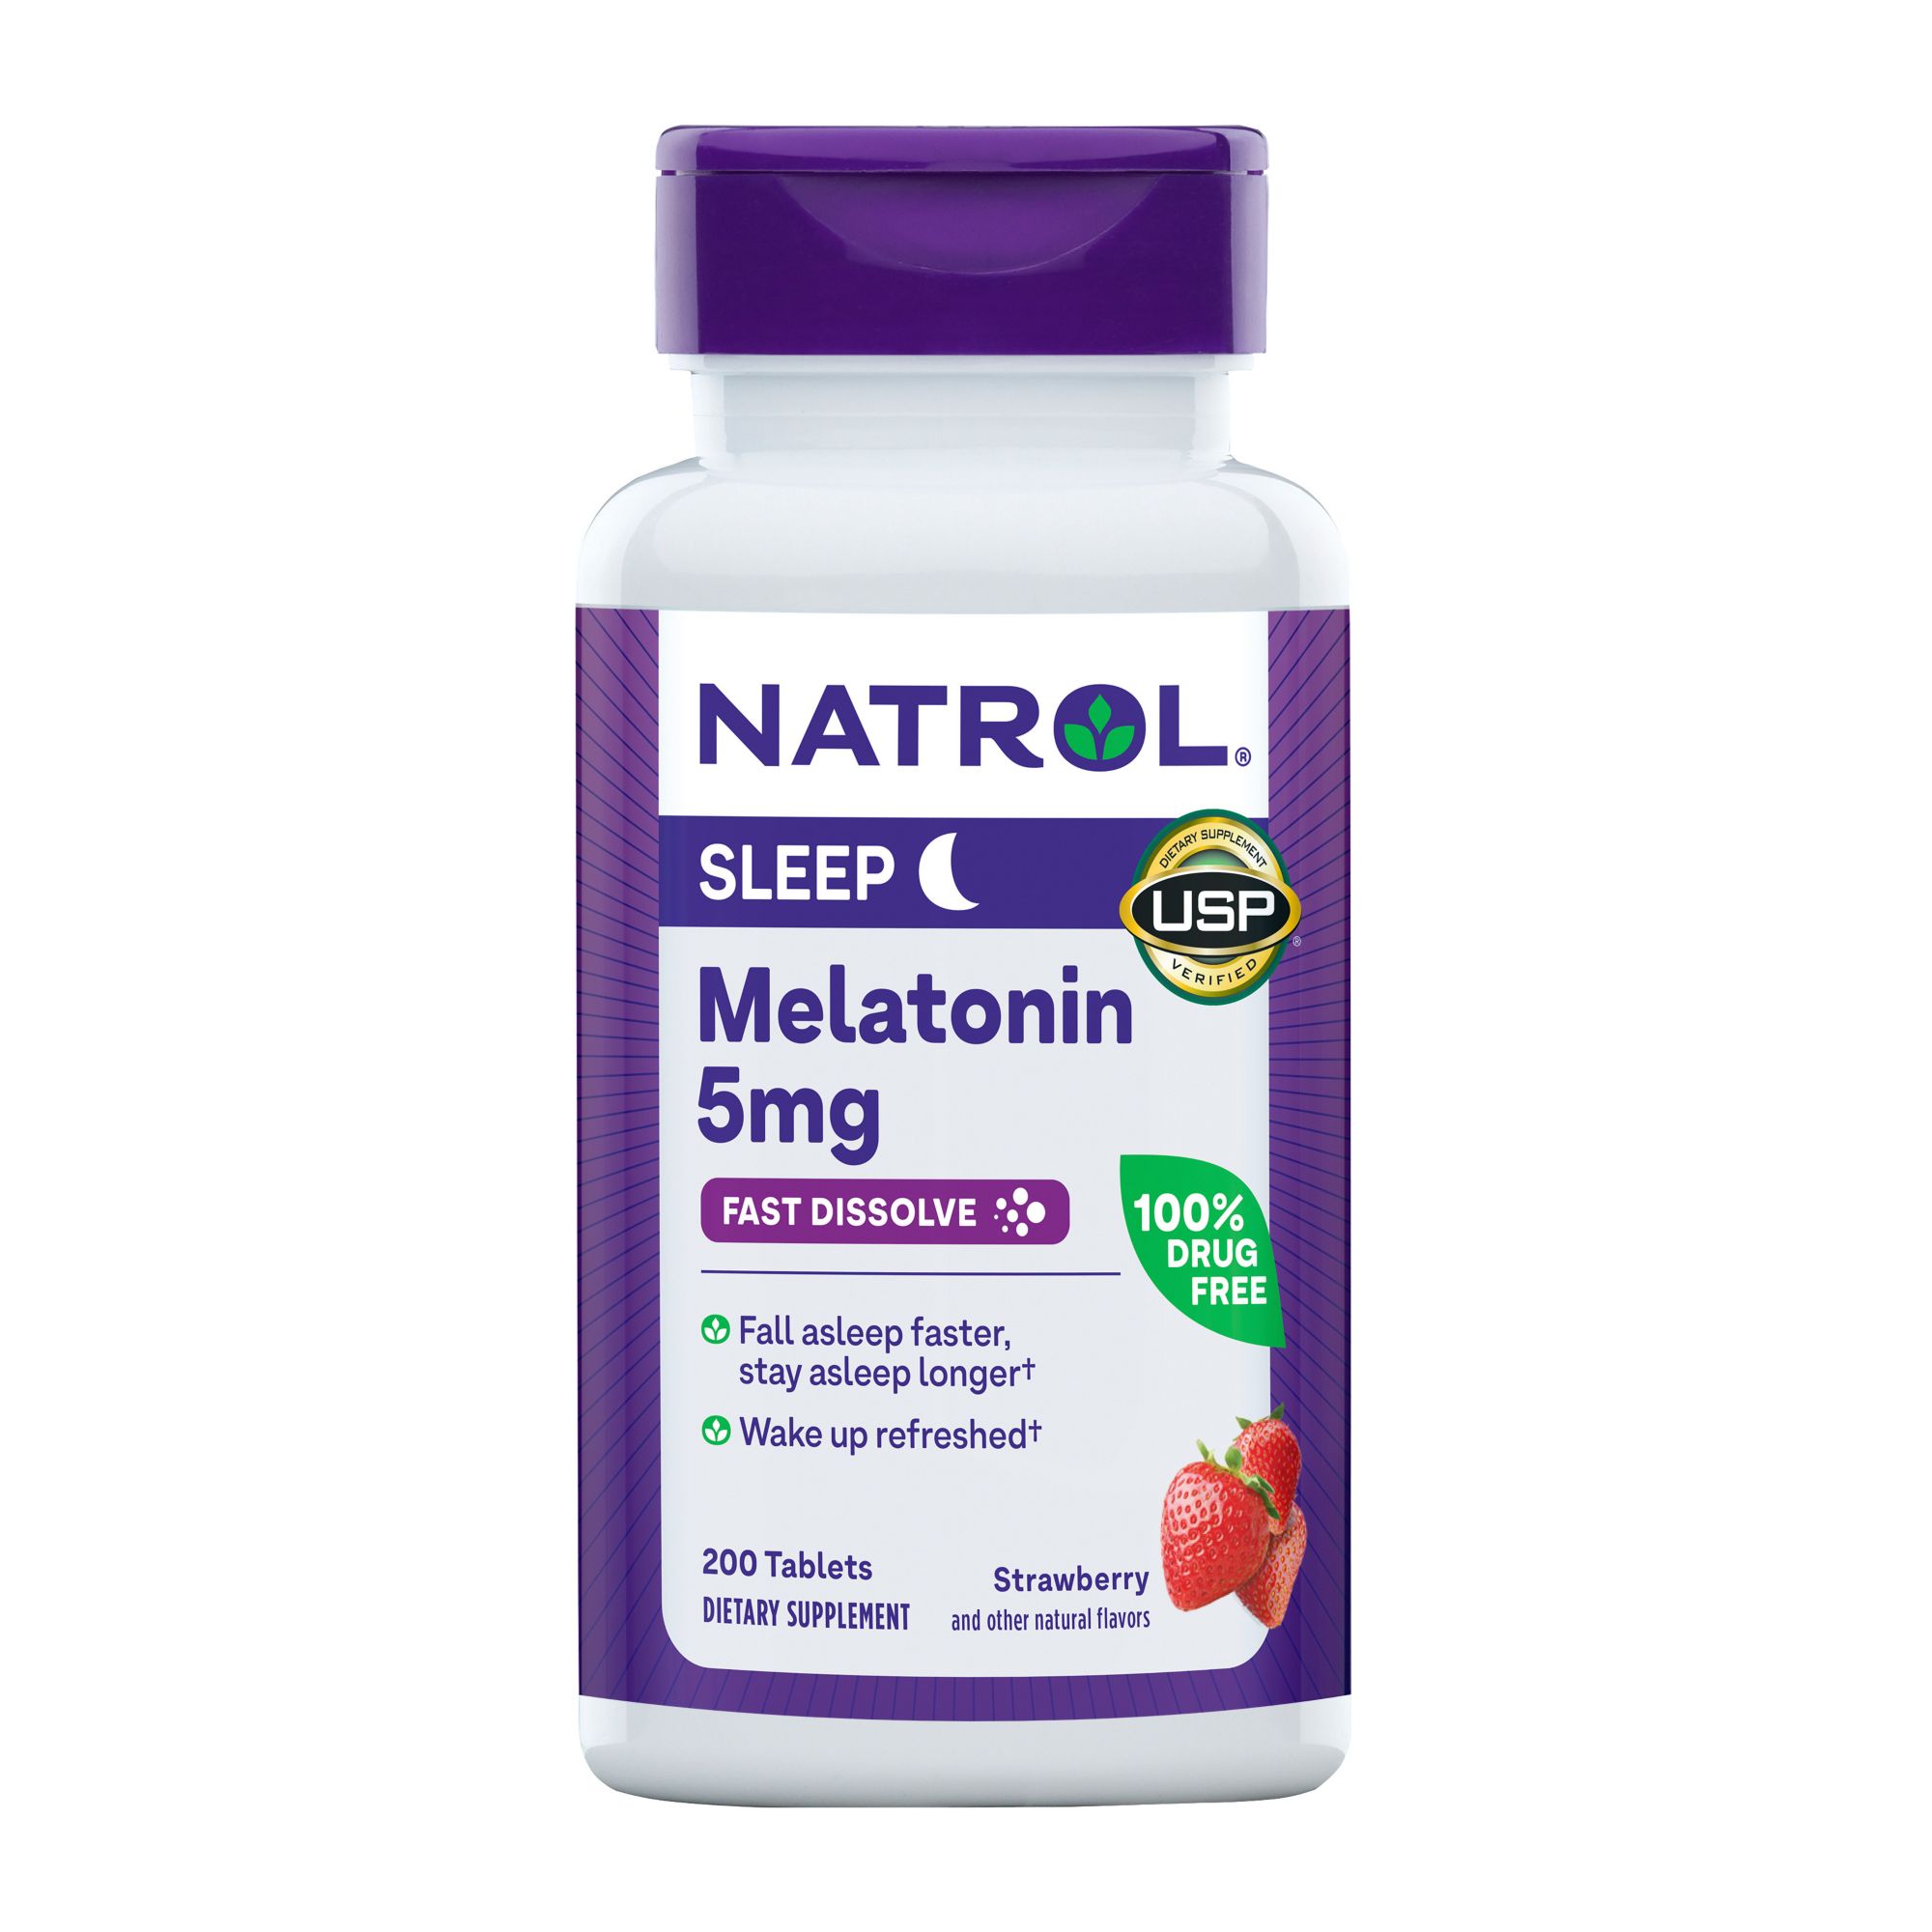 Natrol Melatonin 5mg Fast Dissolve Tablets, 200 ct.